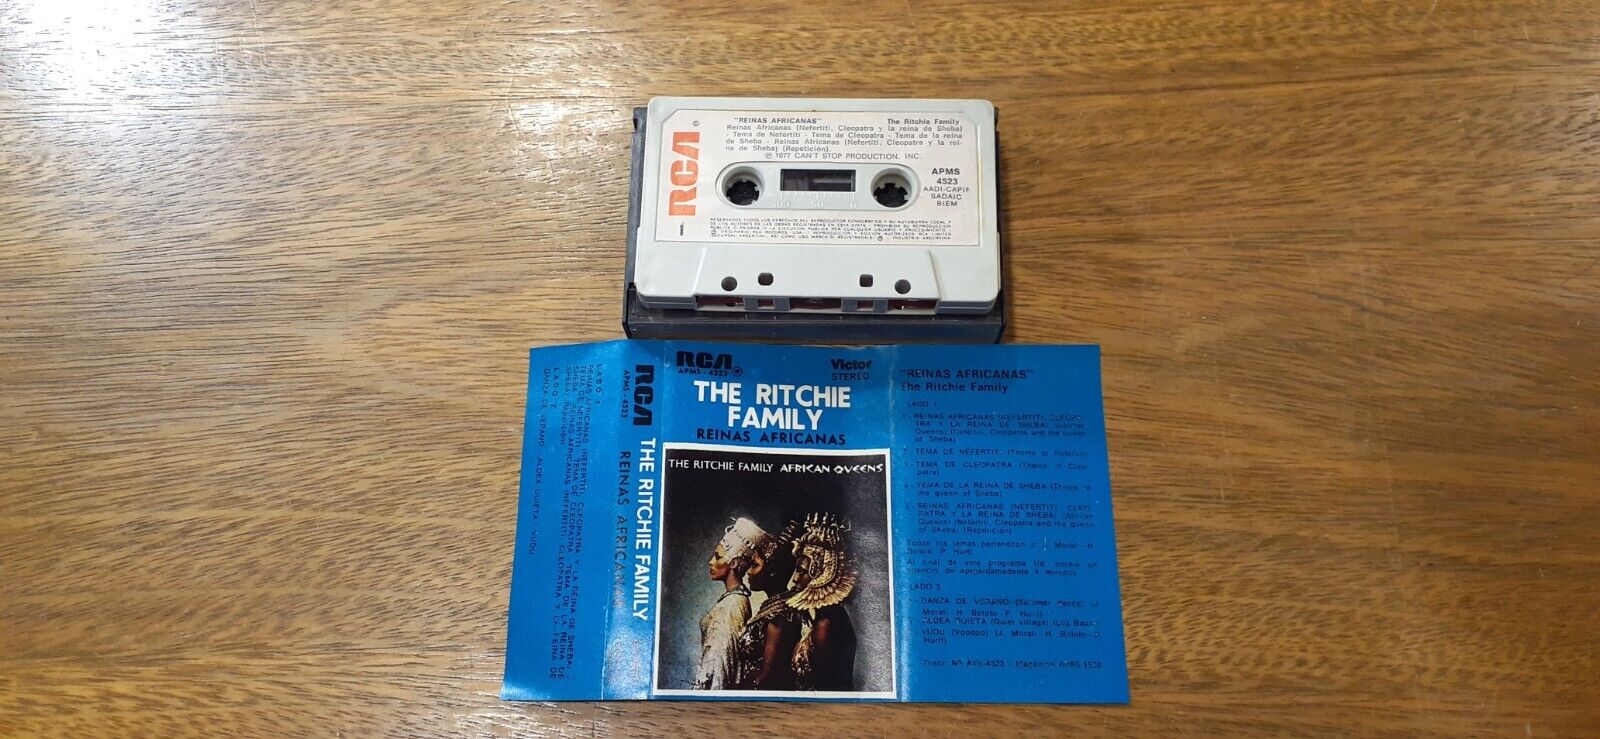 The Ritchie Family	Reinas Africanas	1977	Argentina	Spanish ti Cassette Tape Rare